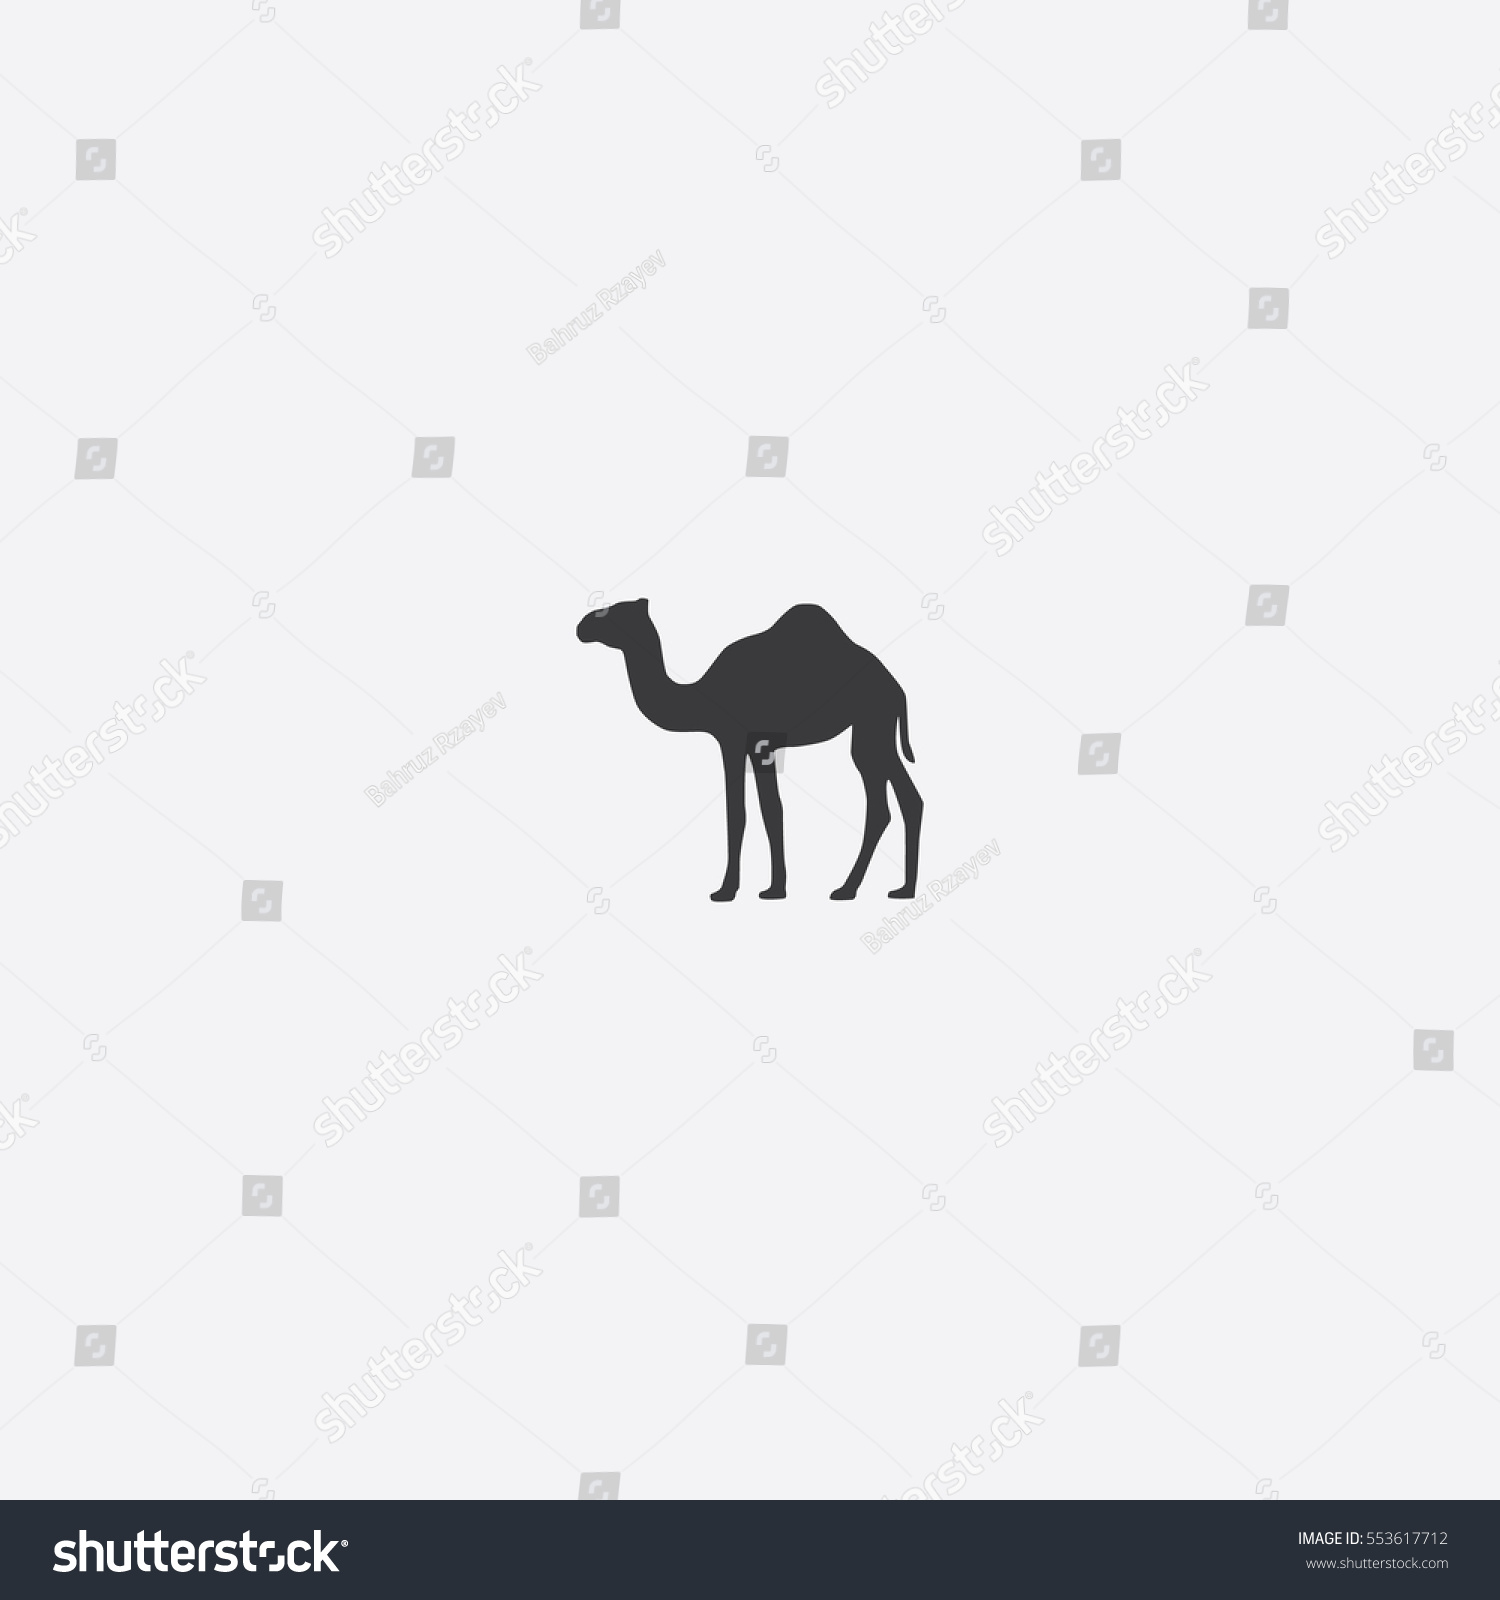 Camel Icon Silhouette Vector Illustration Stock Vector 553617712